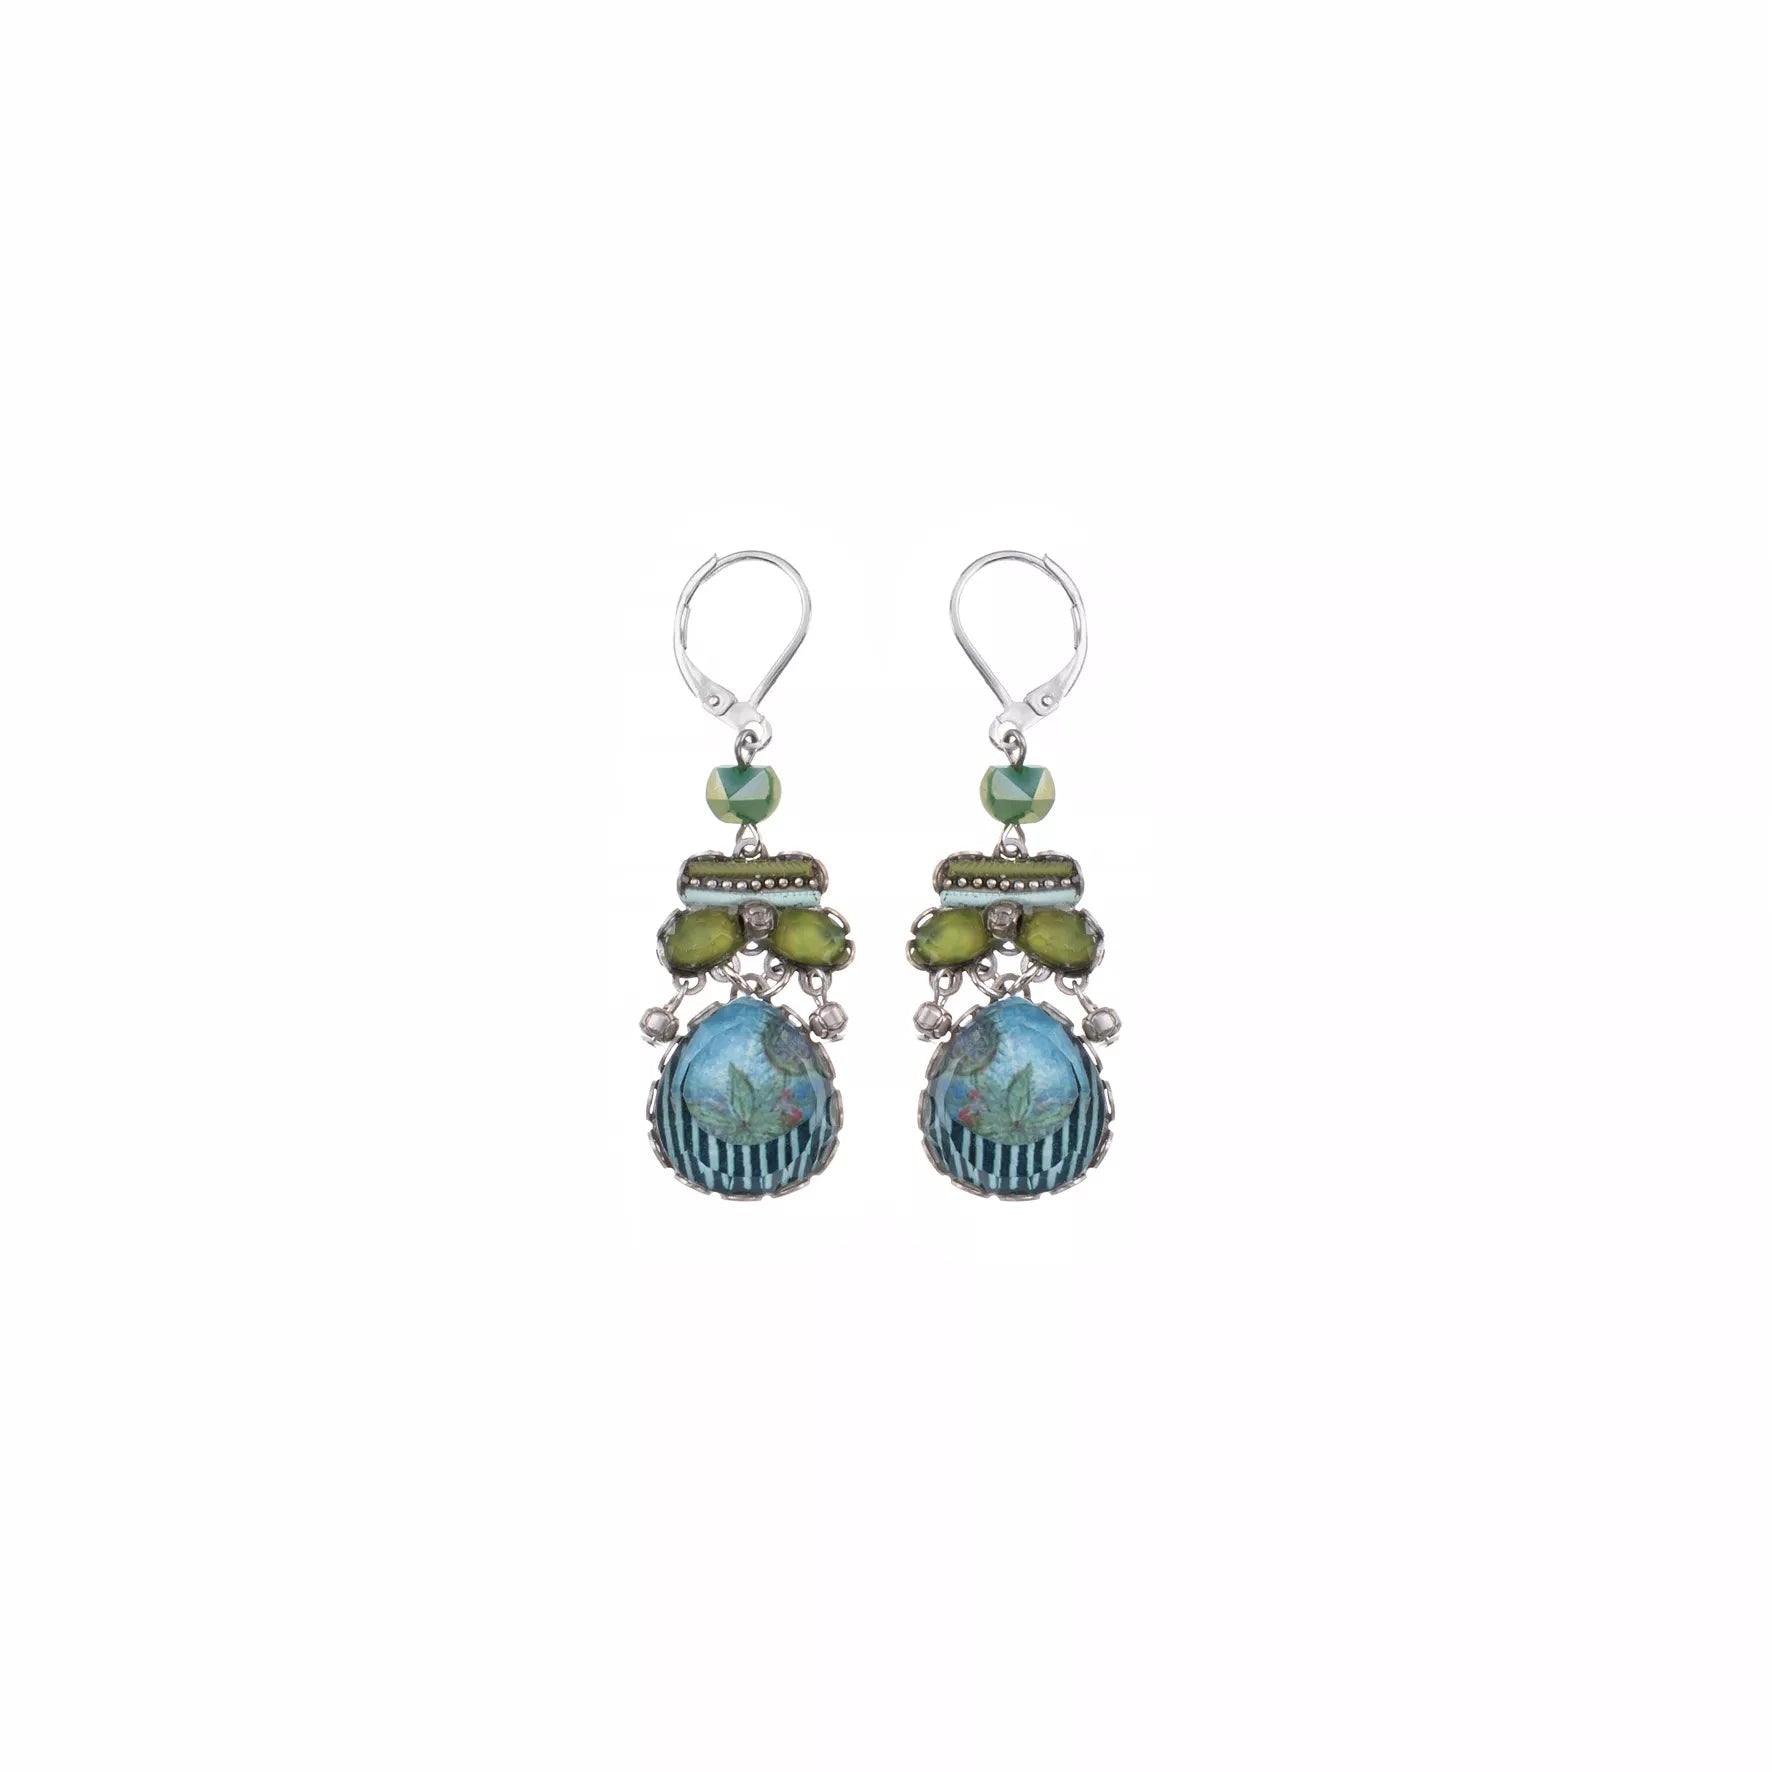 Crisp Air Xaviera Earrings - The Nancy Smillie Shop - Art, Jewellery & Designer Gifts Glasgow